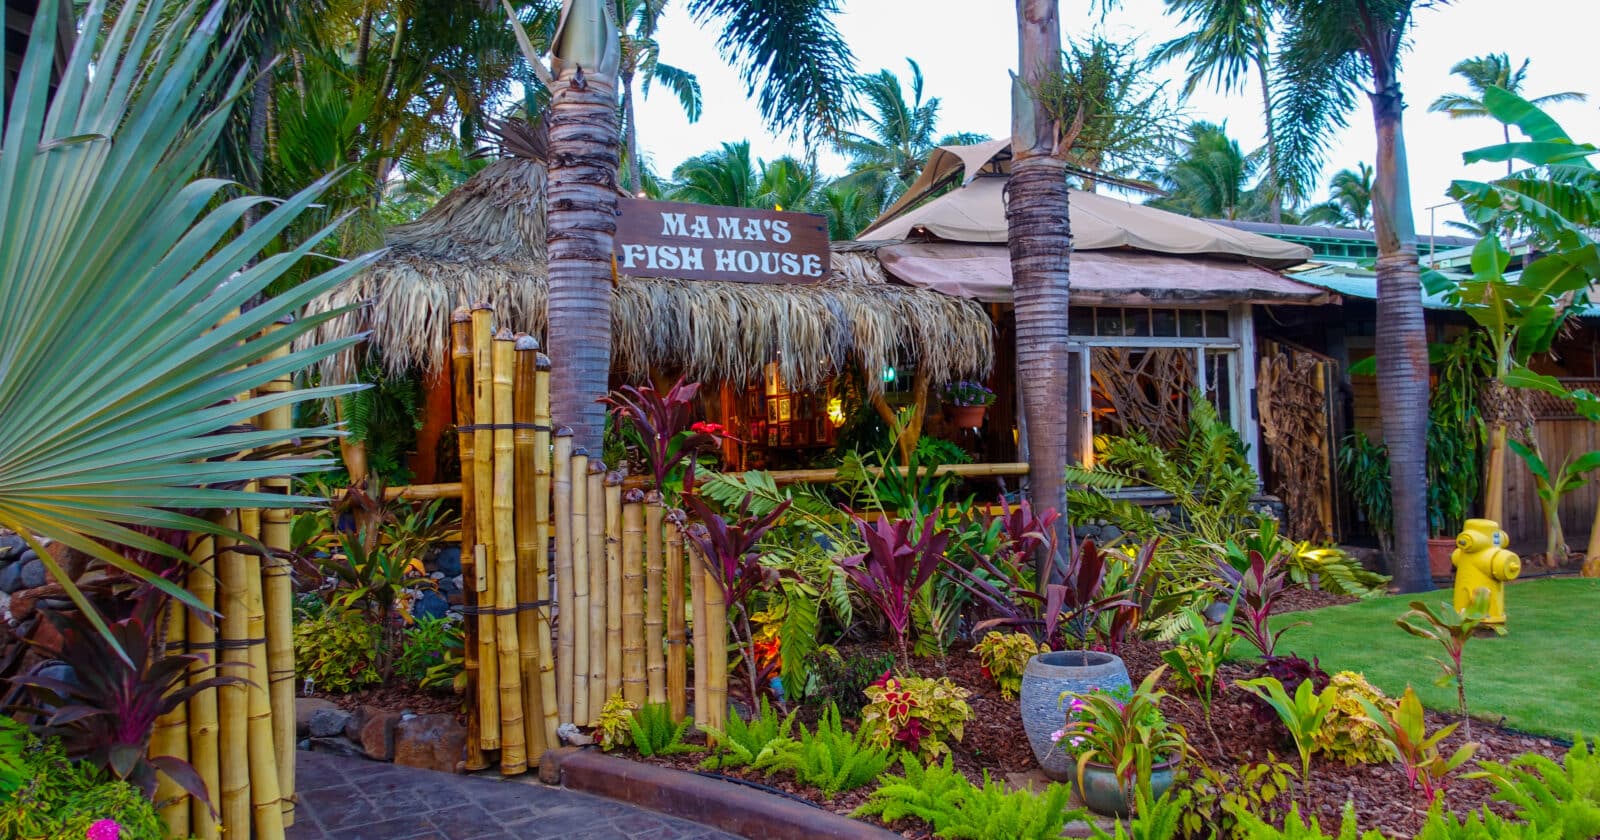 Mama's Fish House, Paia